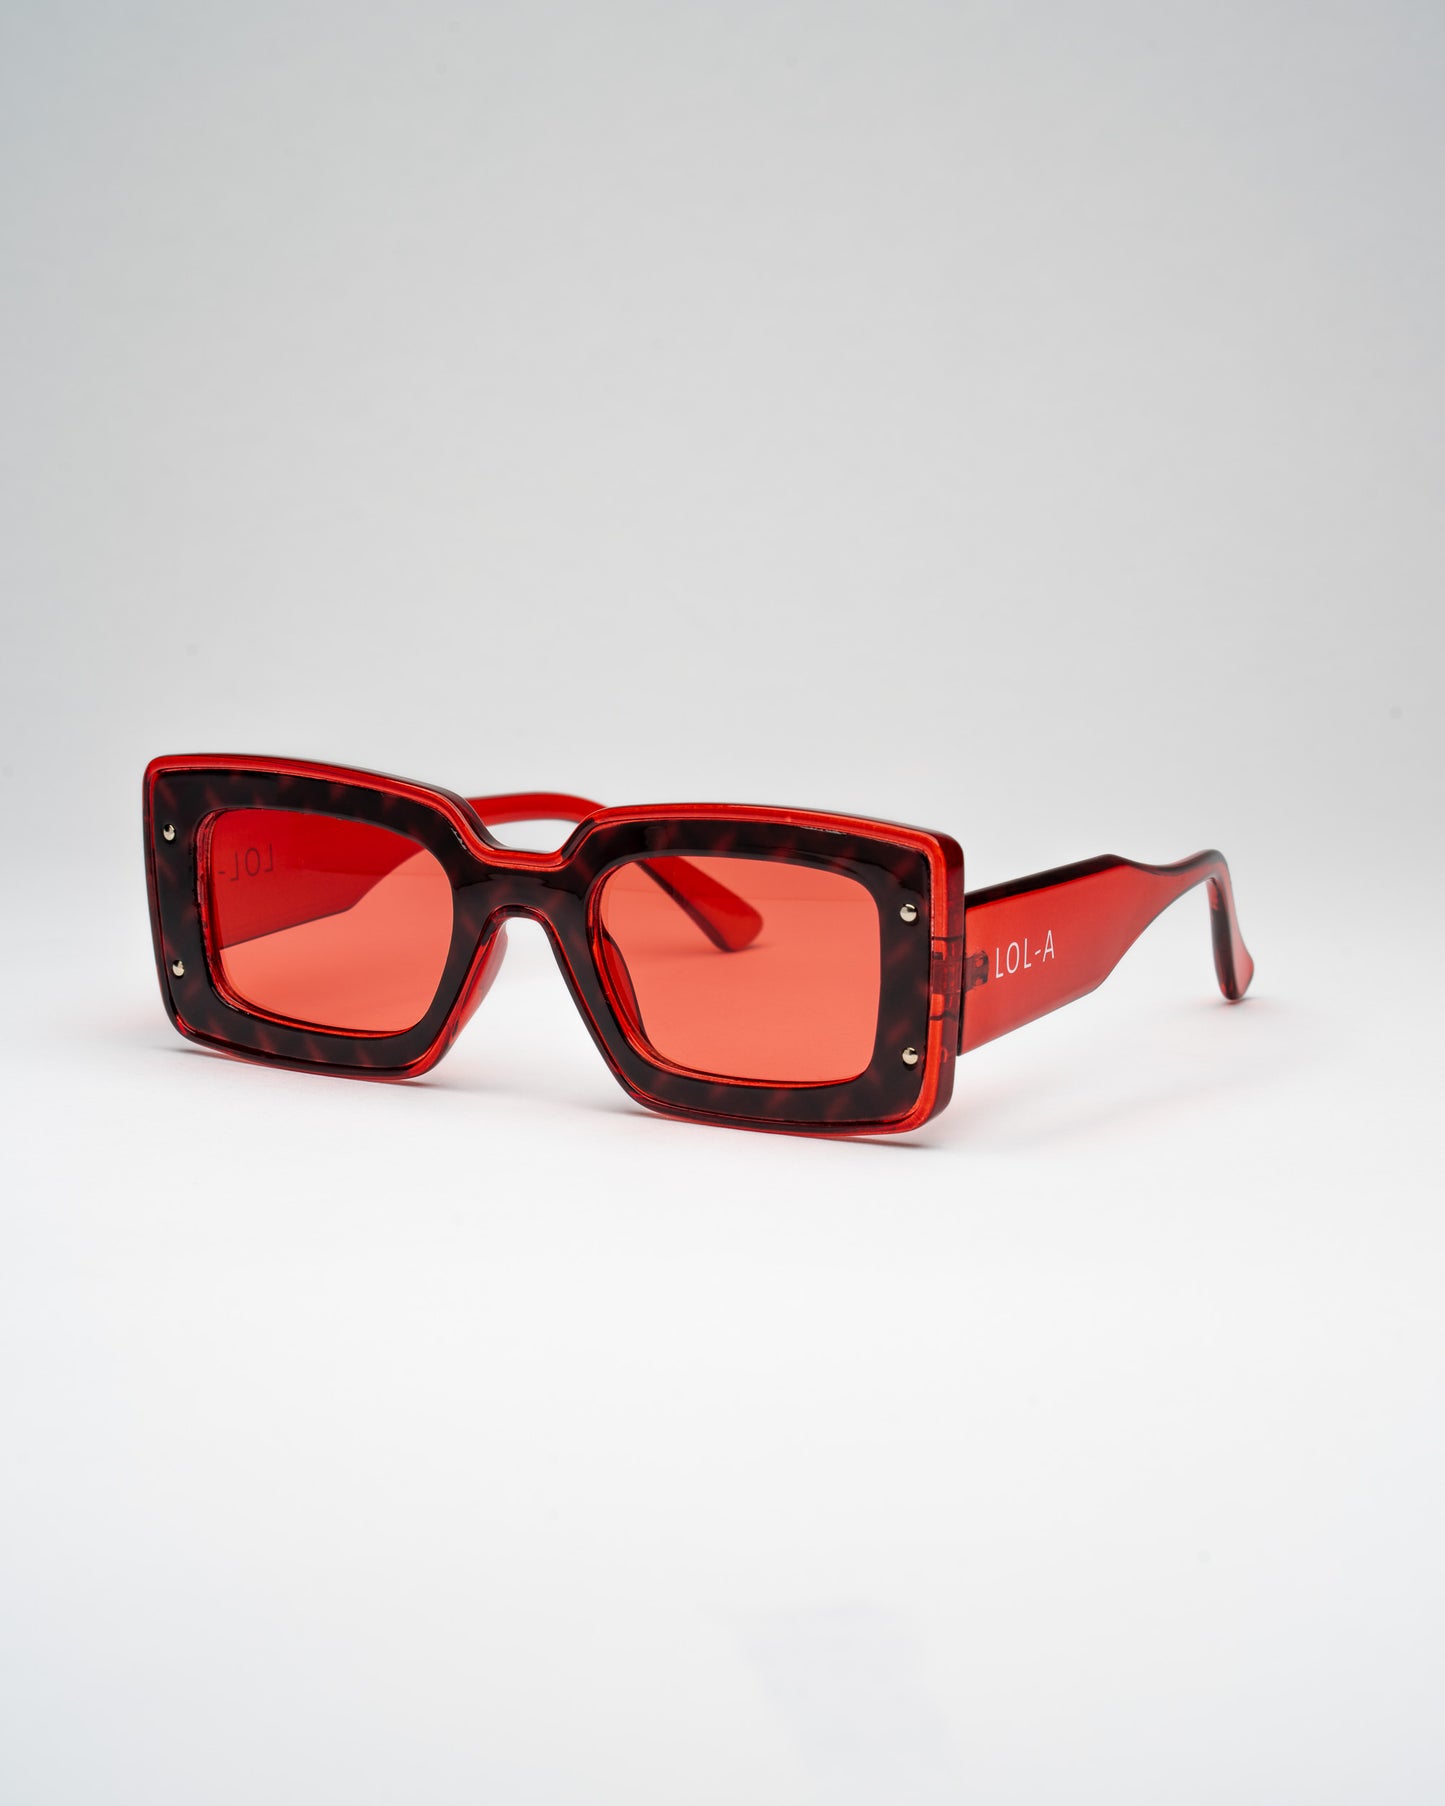 “RETRO RED" Sunglasses